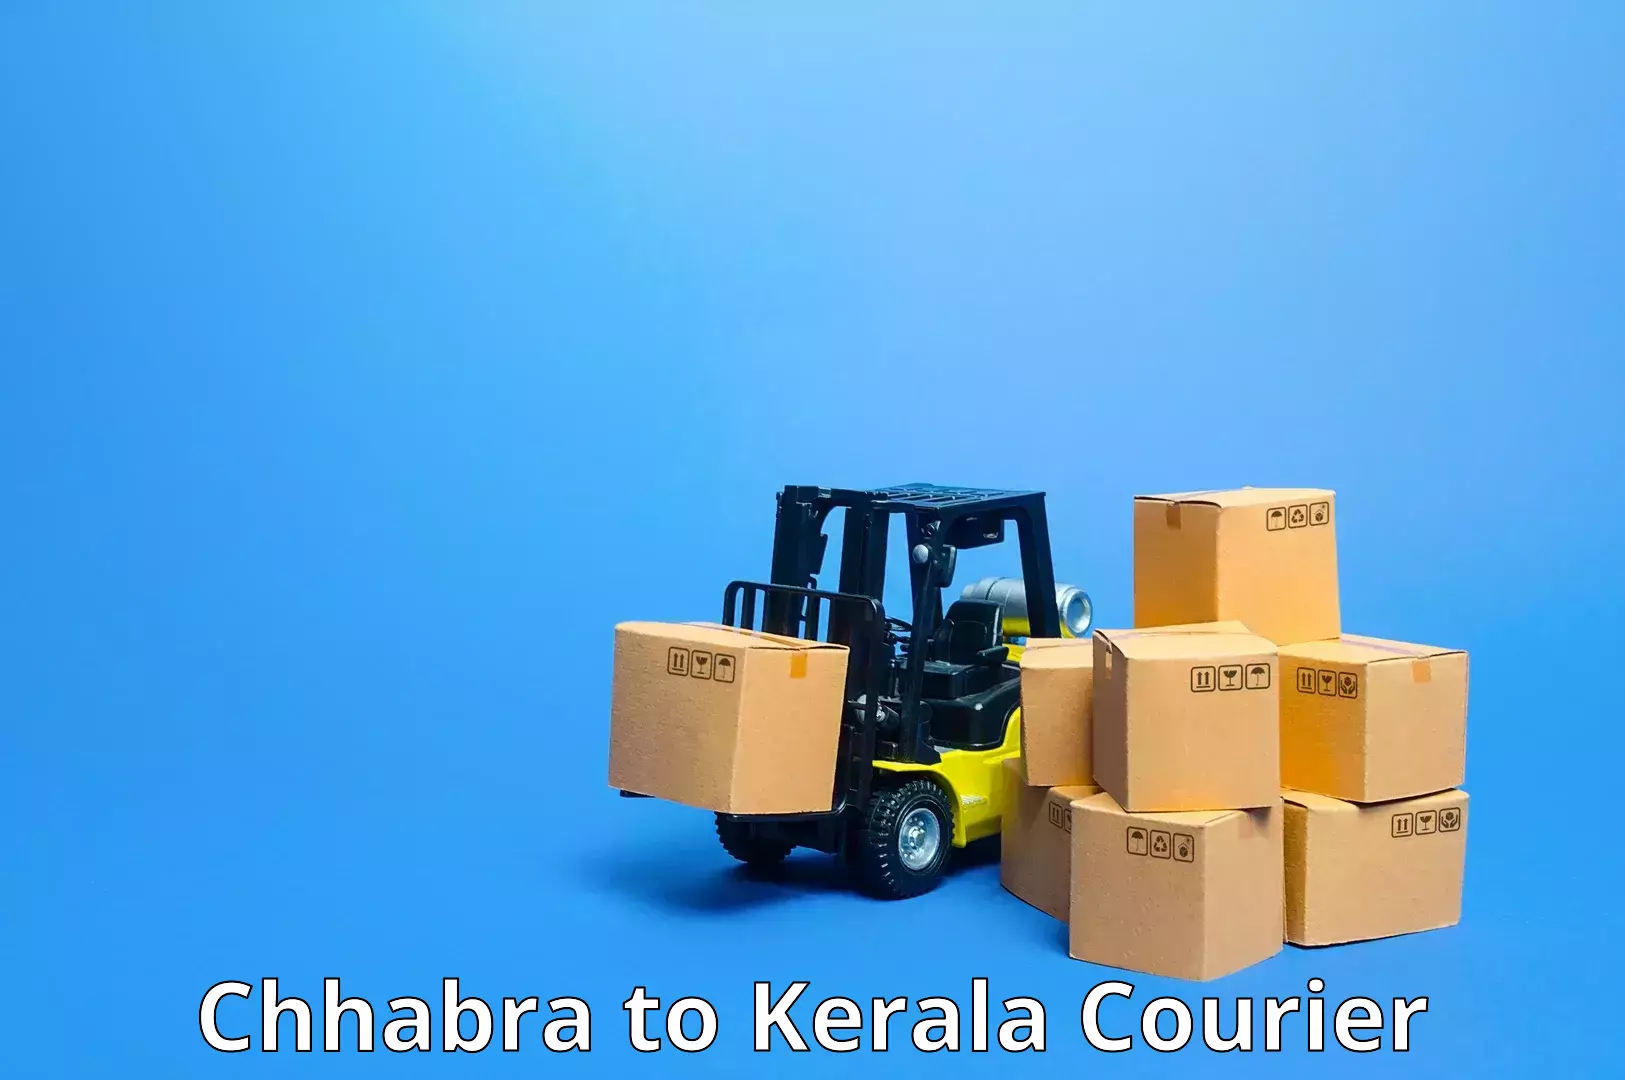 Express logistics service Chhabra to Kozhikode